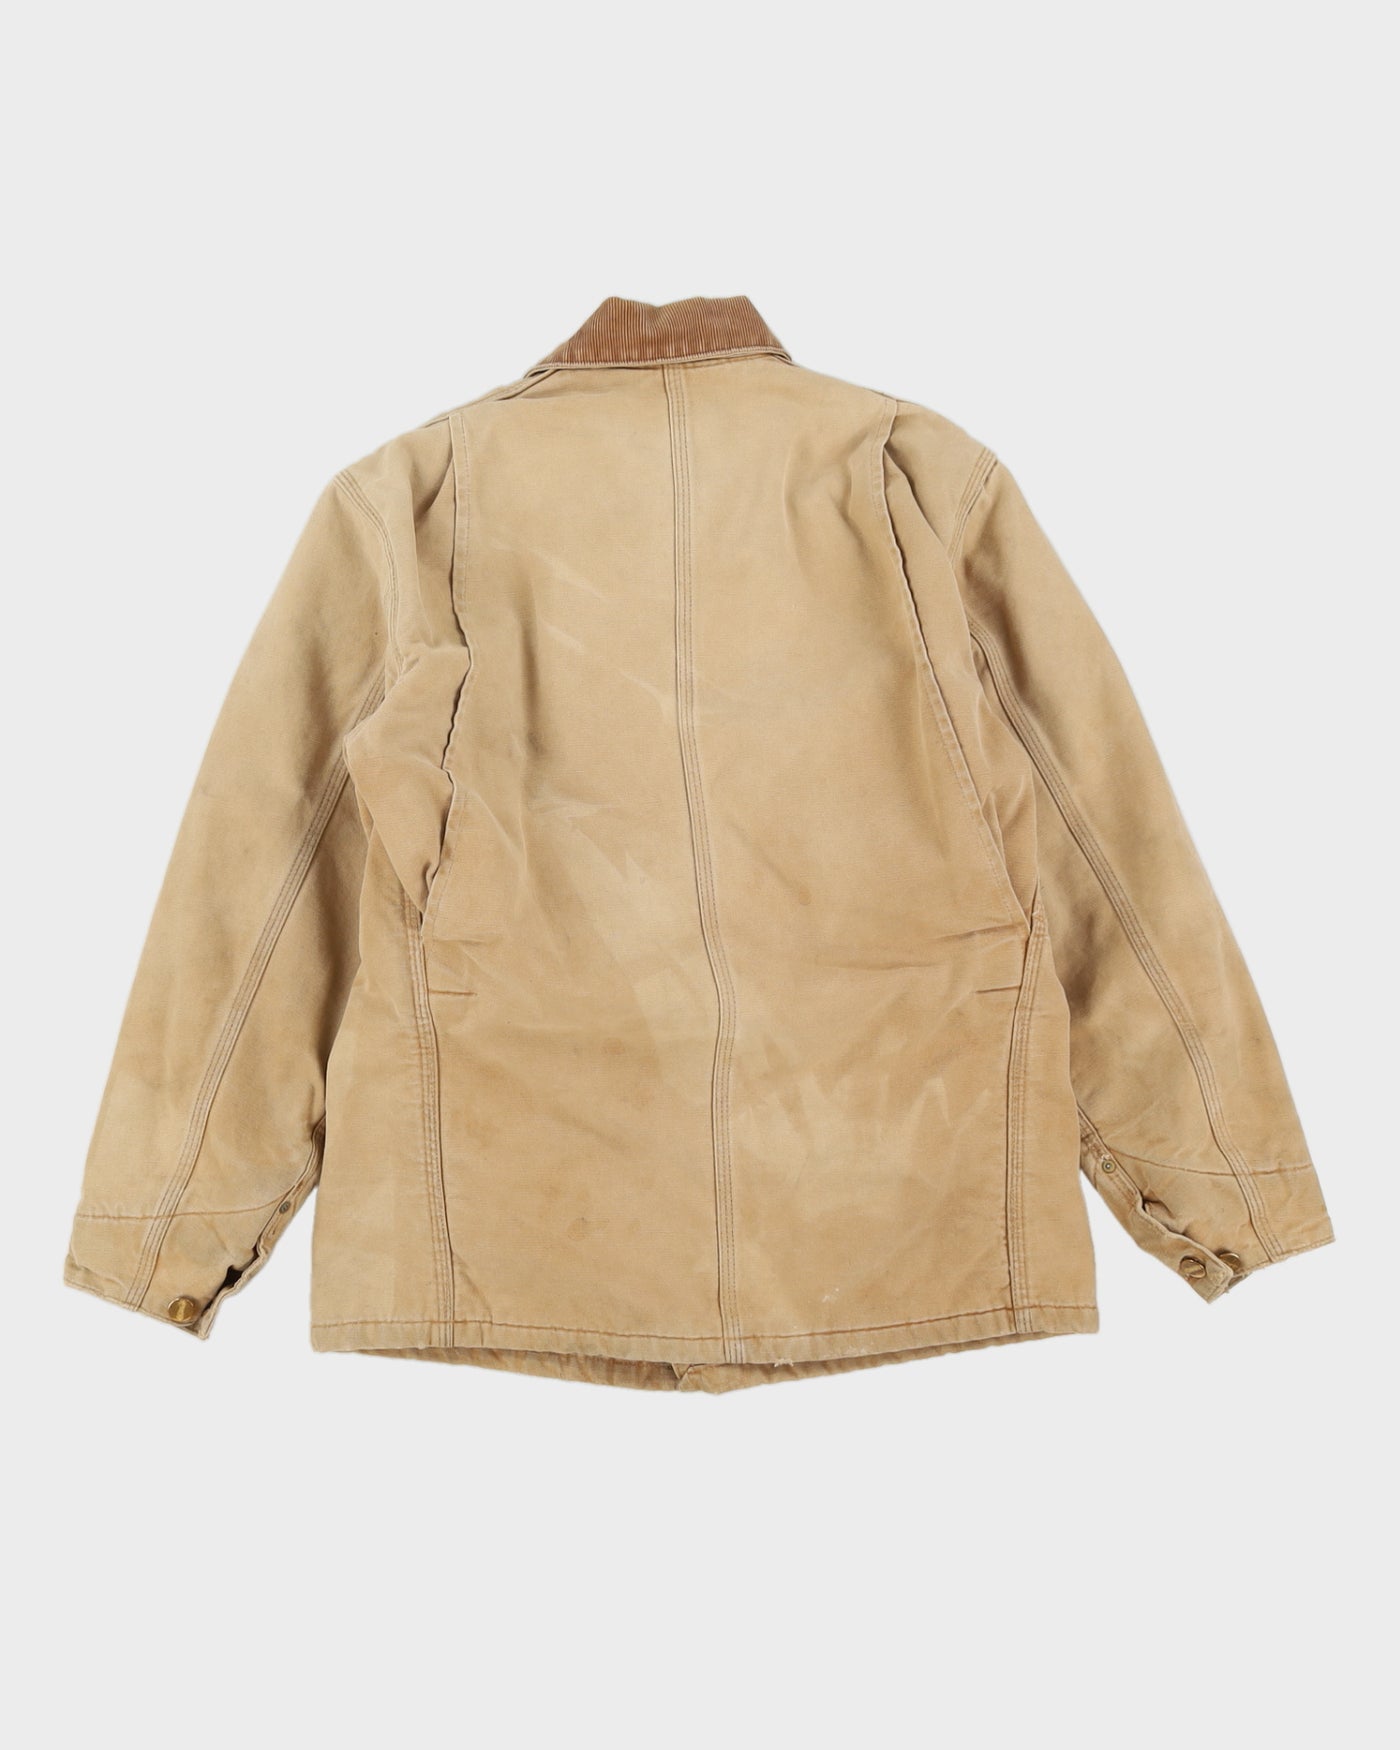 Vintage 90s Carhartt Beige Workwear Jacket - M